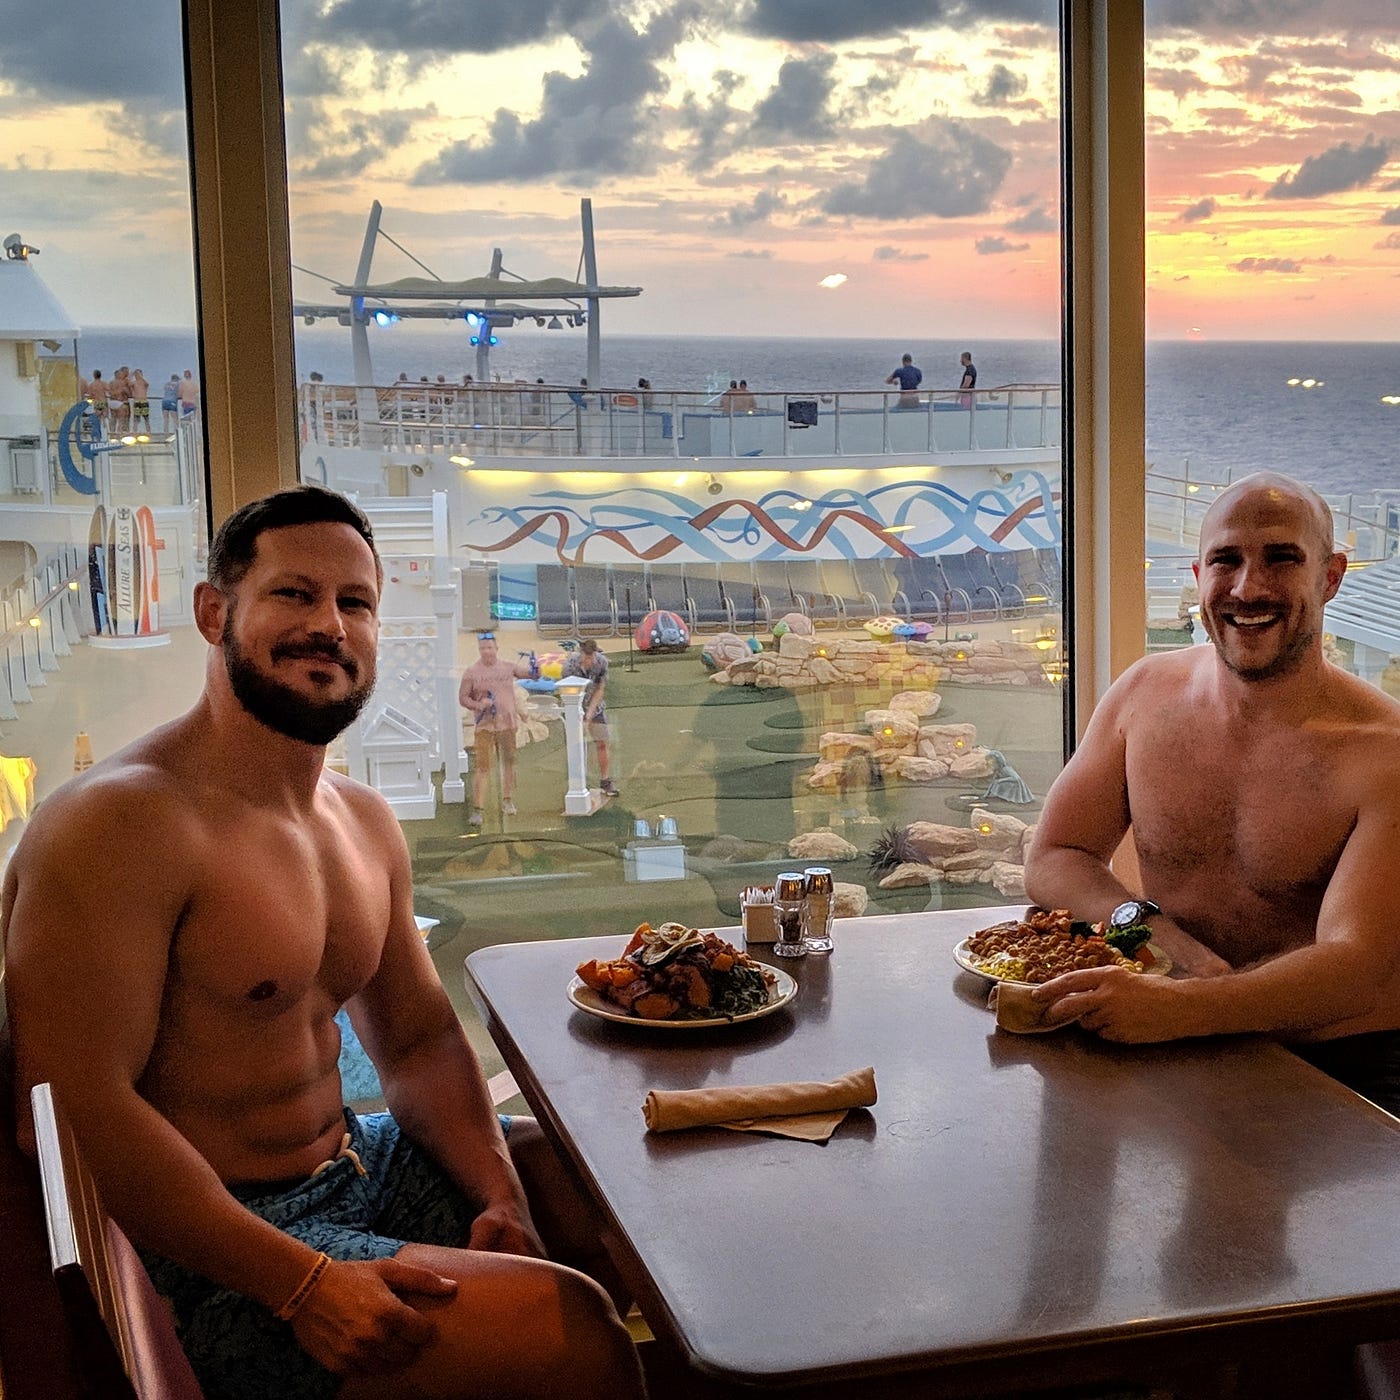 Gay Men On Cruise Ship Swingers Gay Fetish pic photo photo